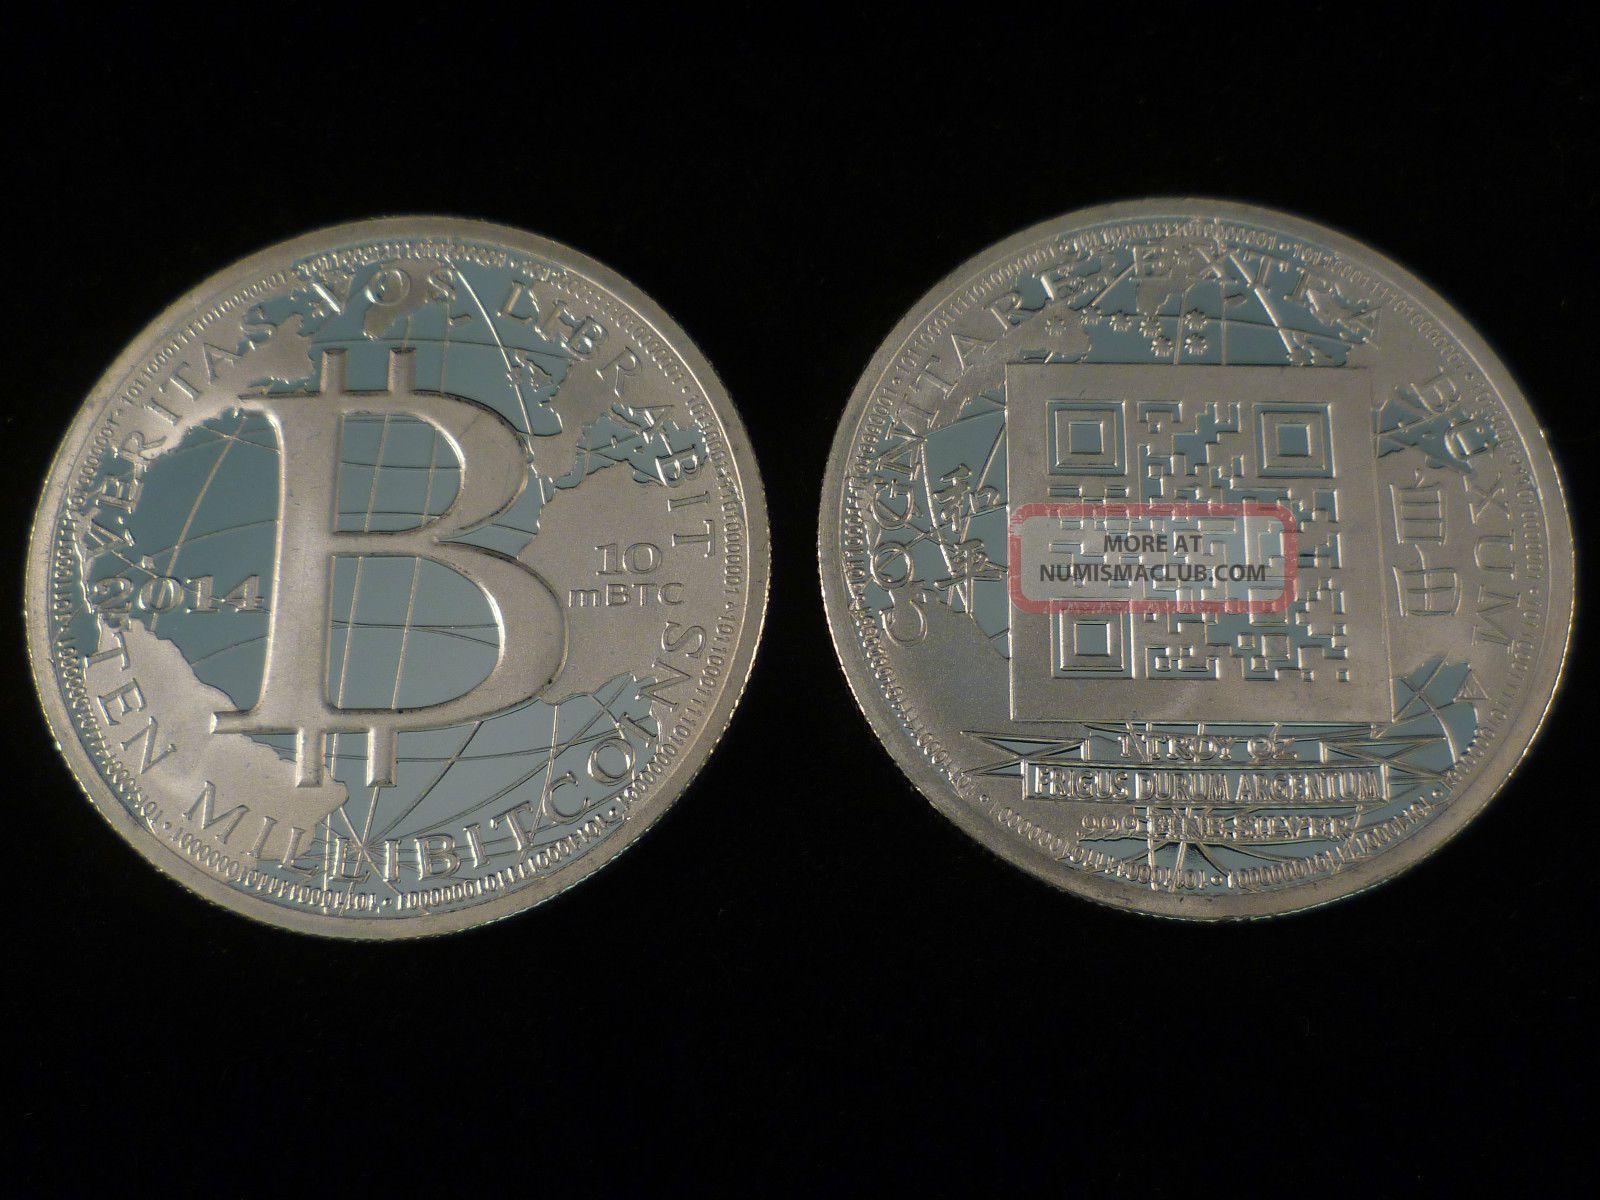 999 silver 10 milli bitcoins